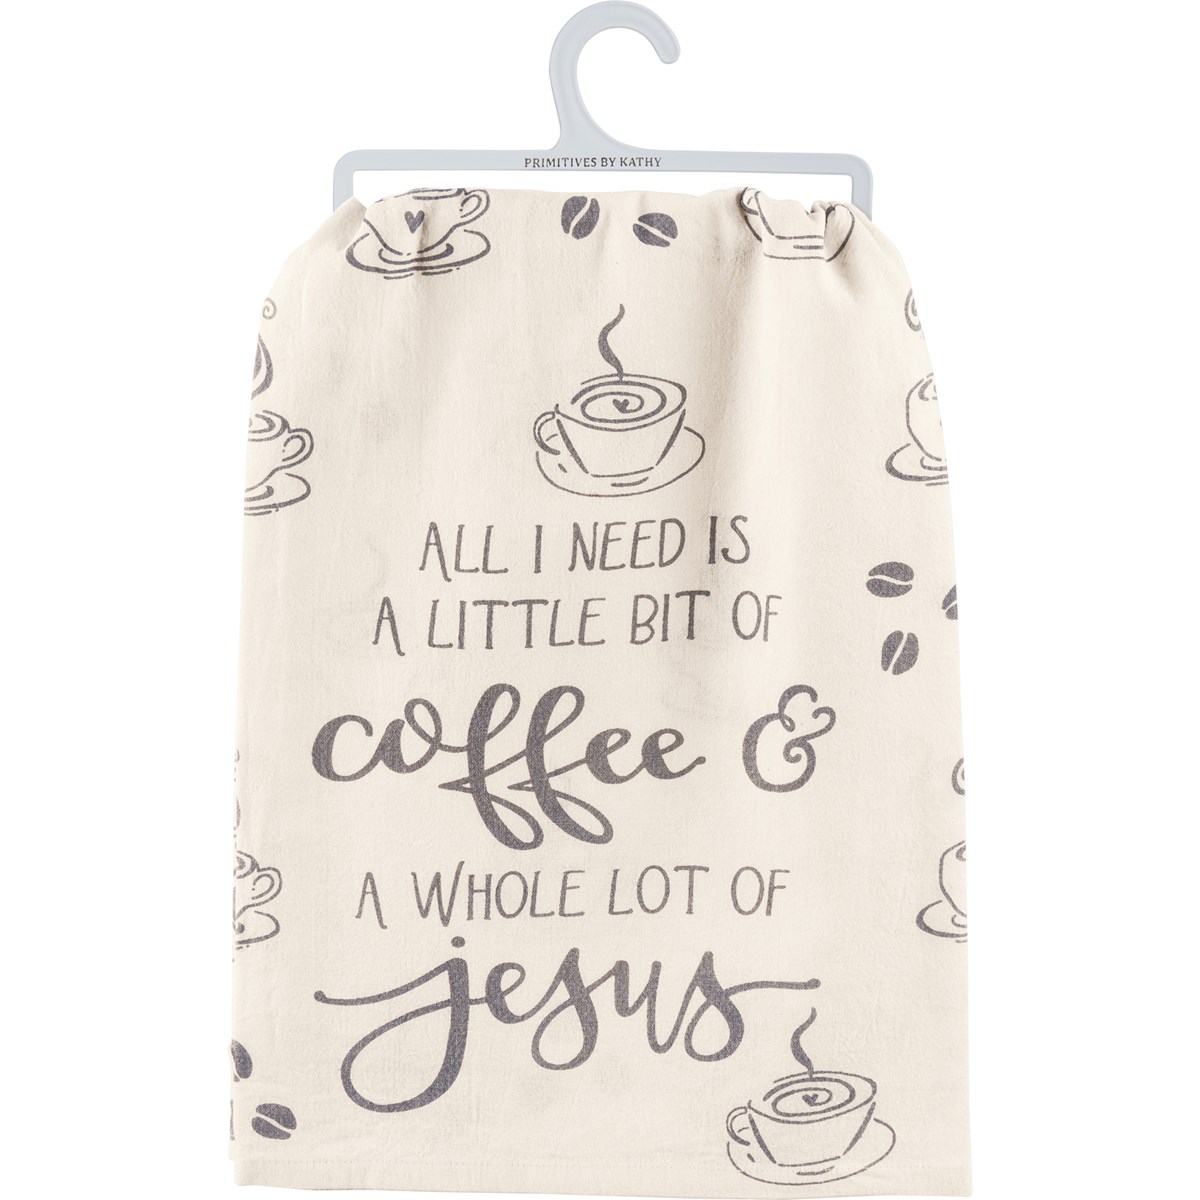 Coffee & Jesus Kitchen Towel - Cotton